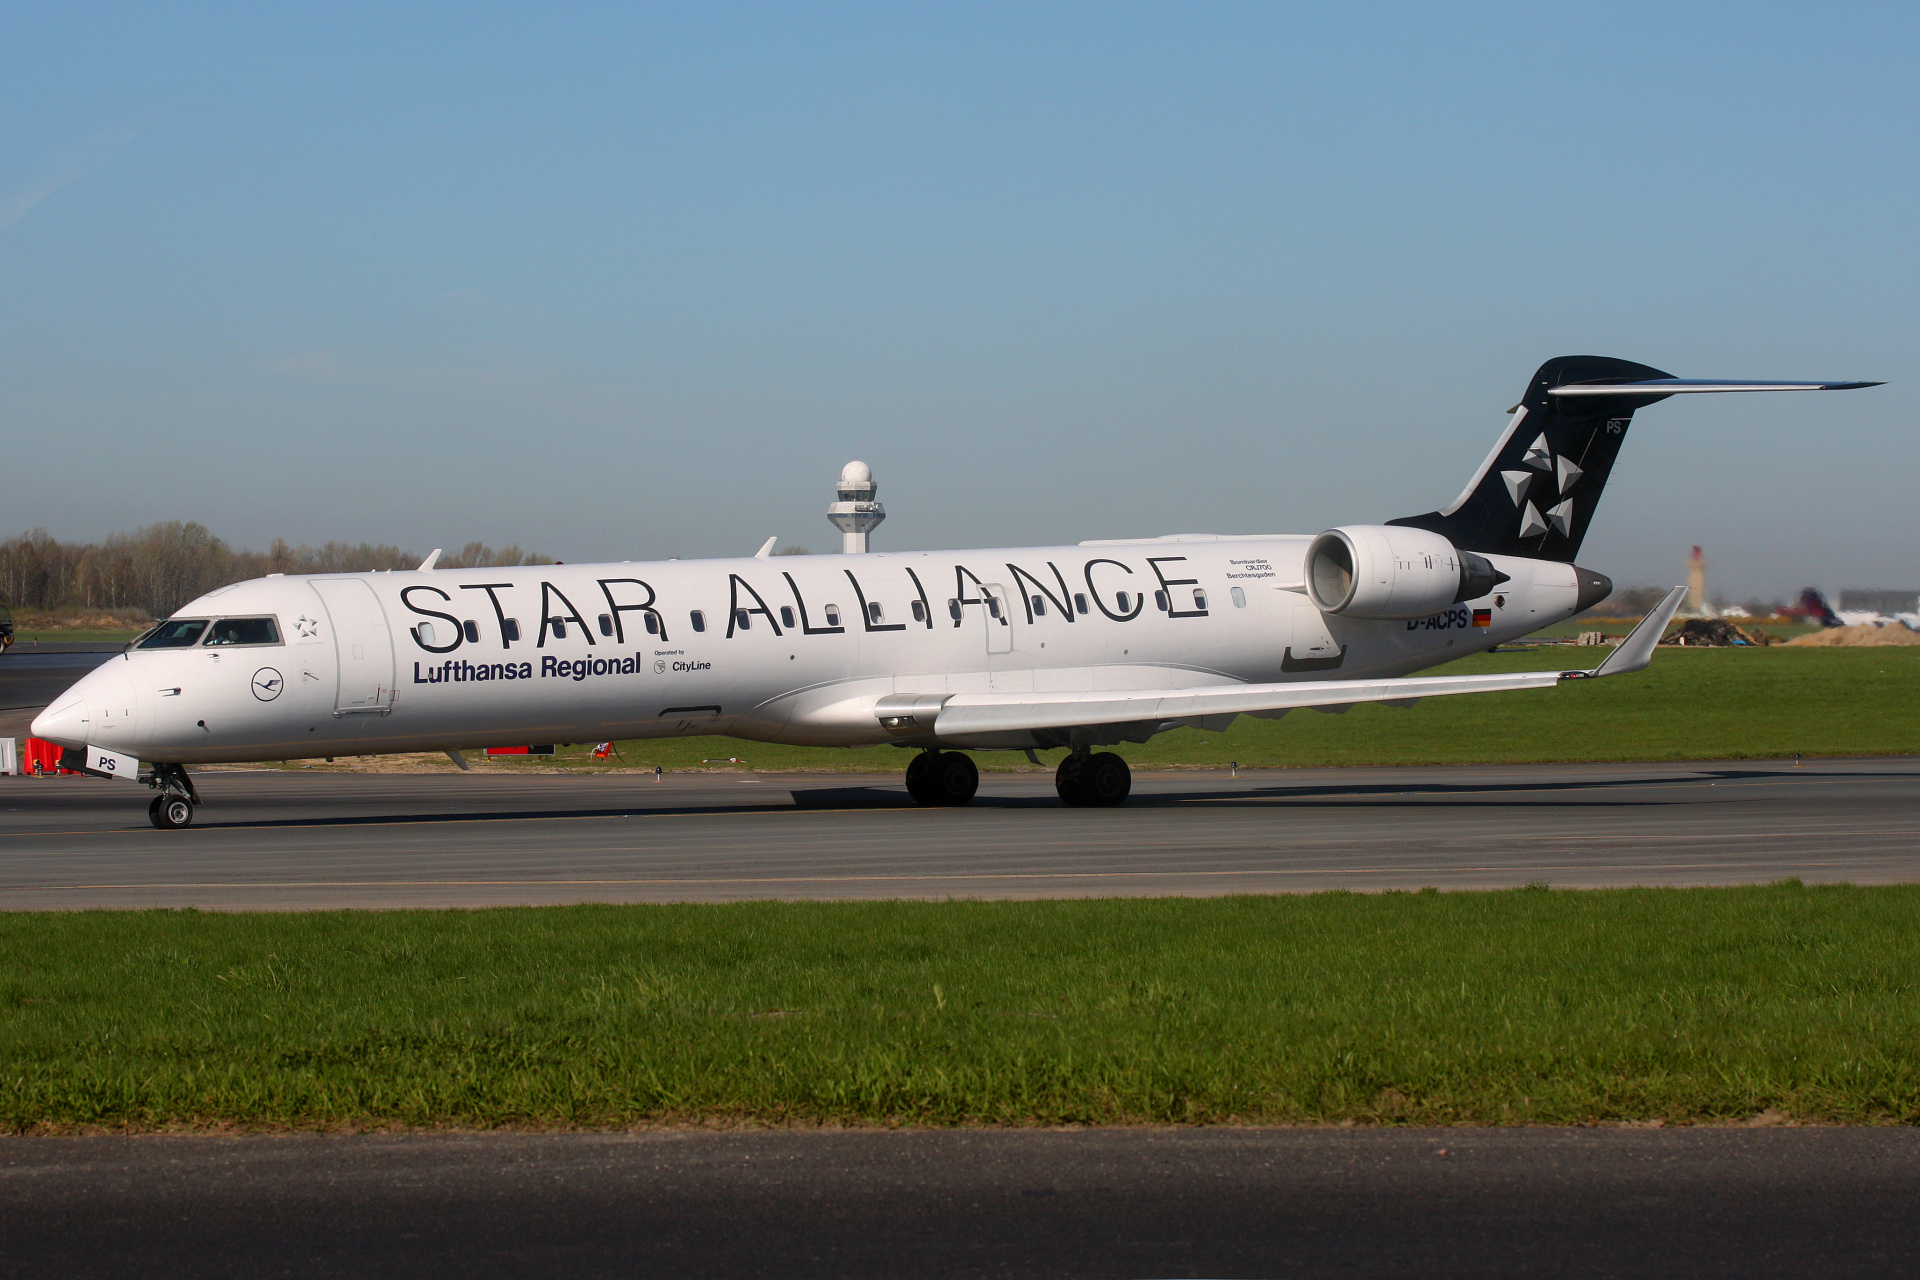 D-ACPS, Lufthansa Regional - CityLine (Star Alliance livery) (Aircraft » EPWA Spotting » Mitsubishi Regional Jet » CRJ-700)